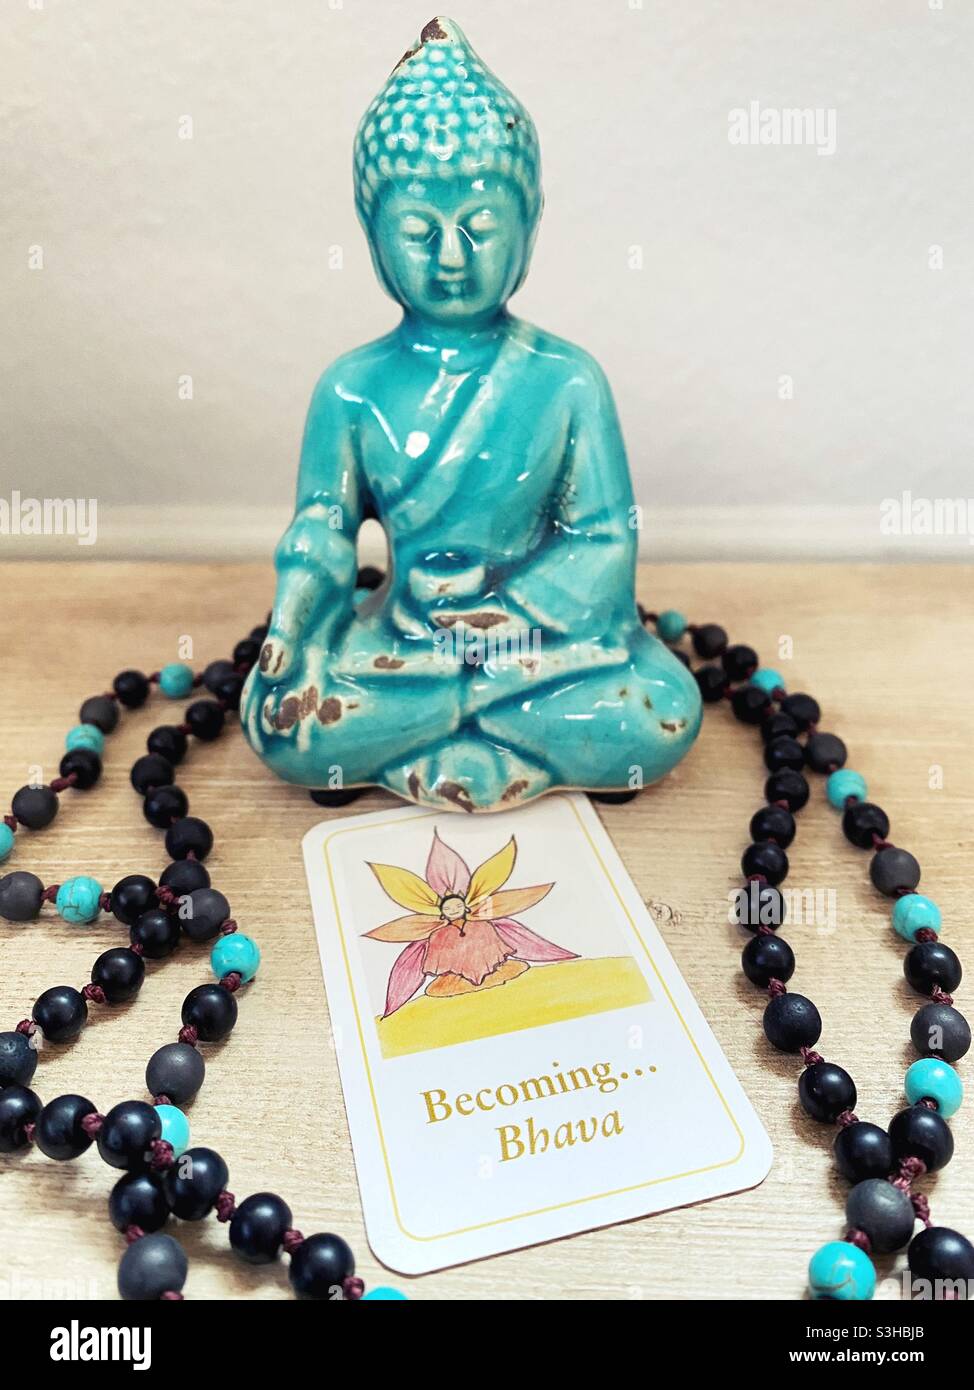 A Buddha figurine, prayer beads, and upturned dharma card with word ' becoming'. Stock Photo